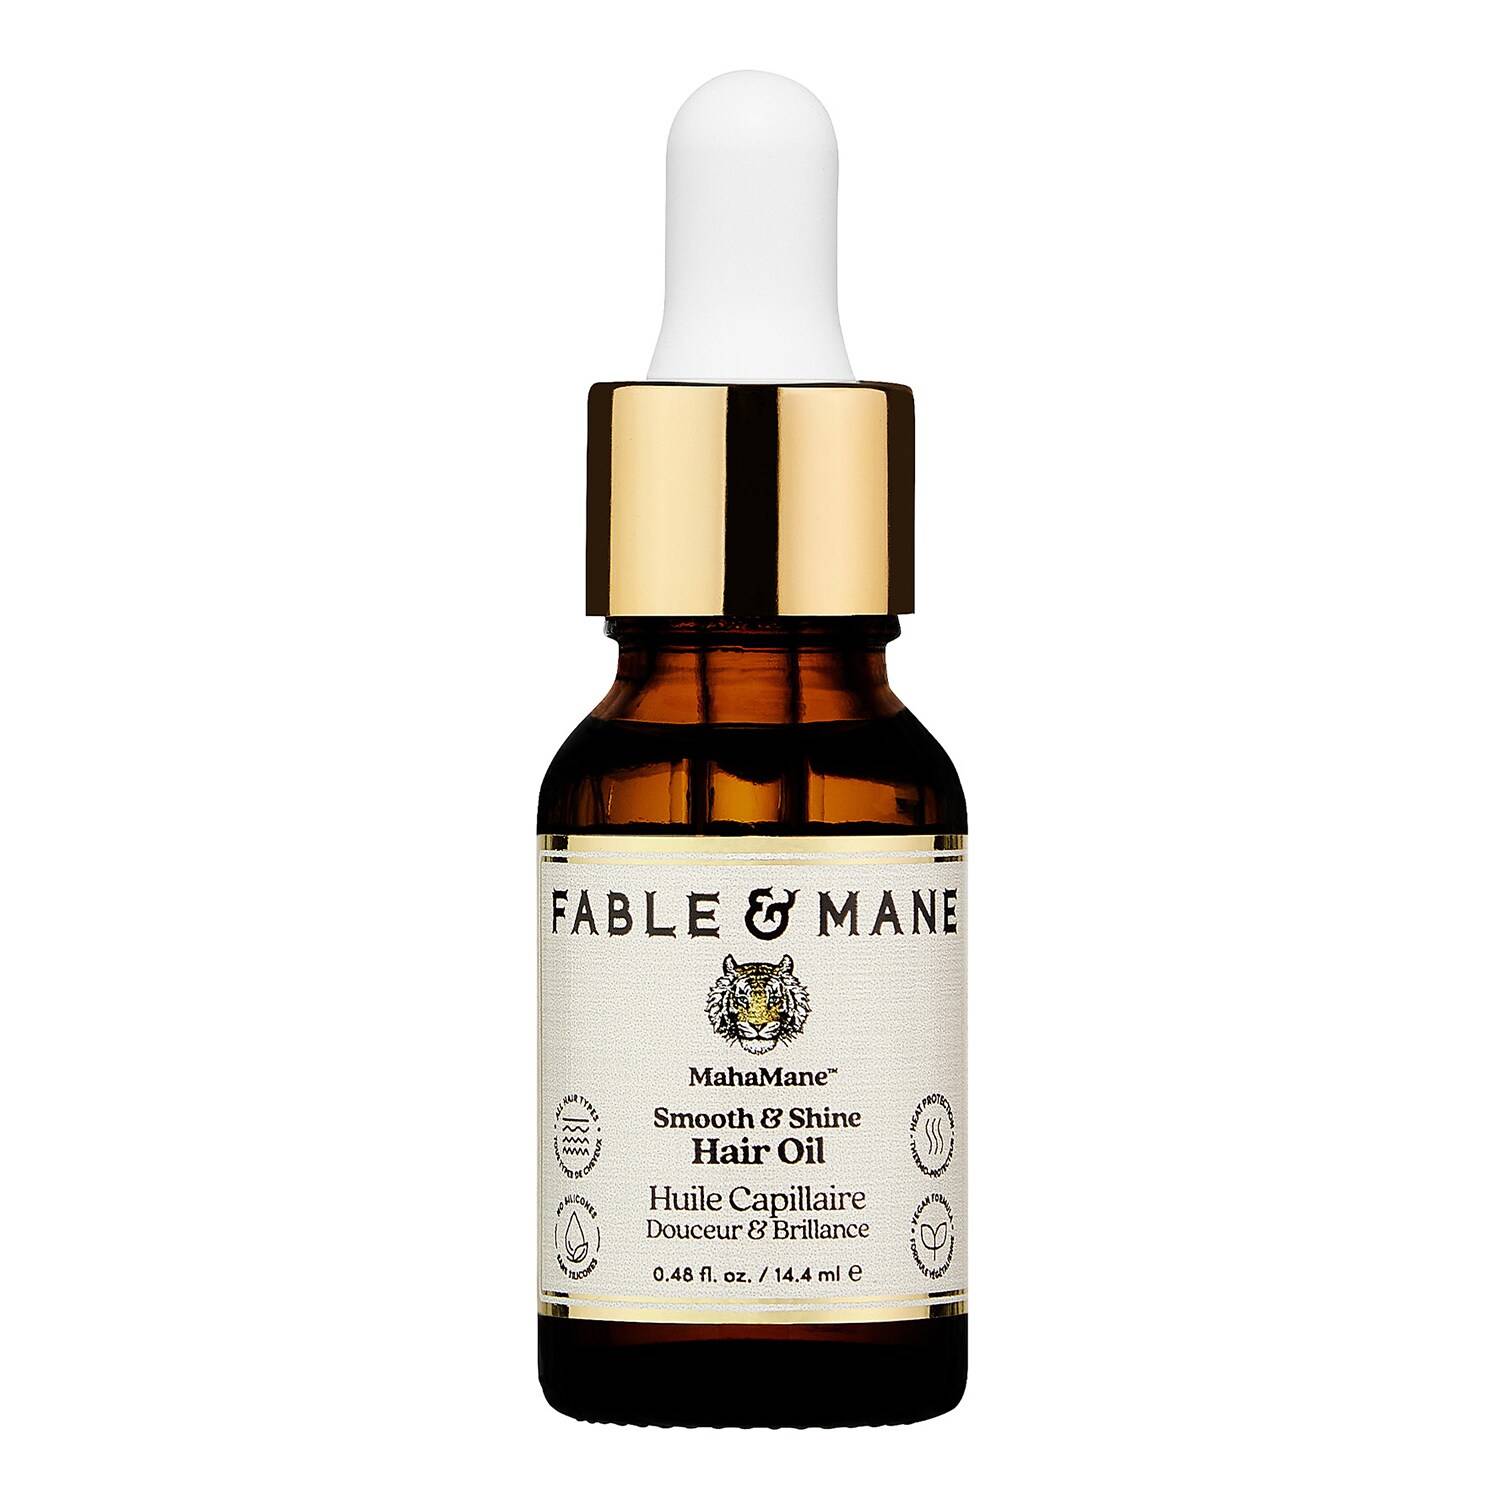 FABLE & MANE MahaMane Smooth & Shine Hair Oil 14.4ml